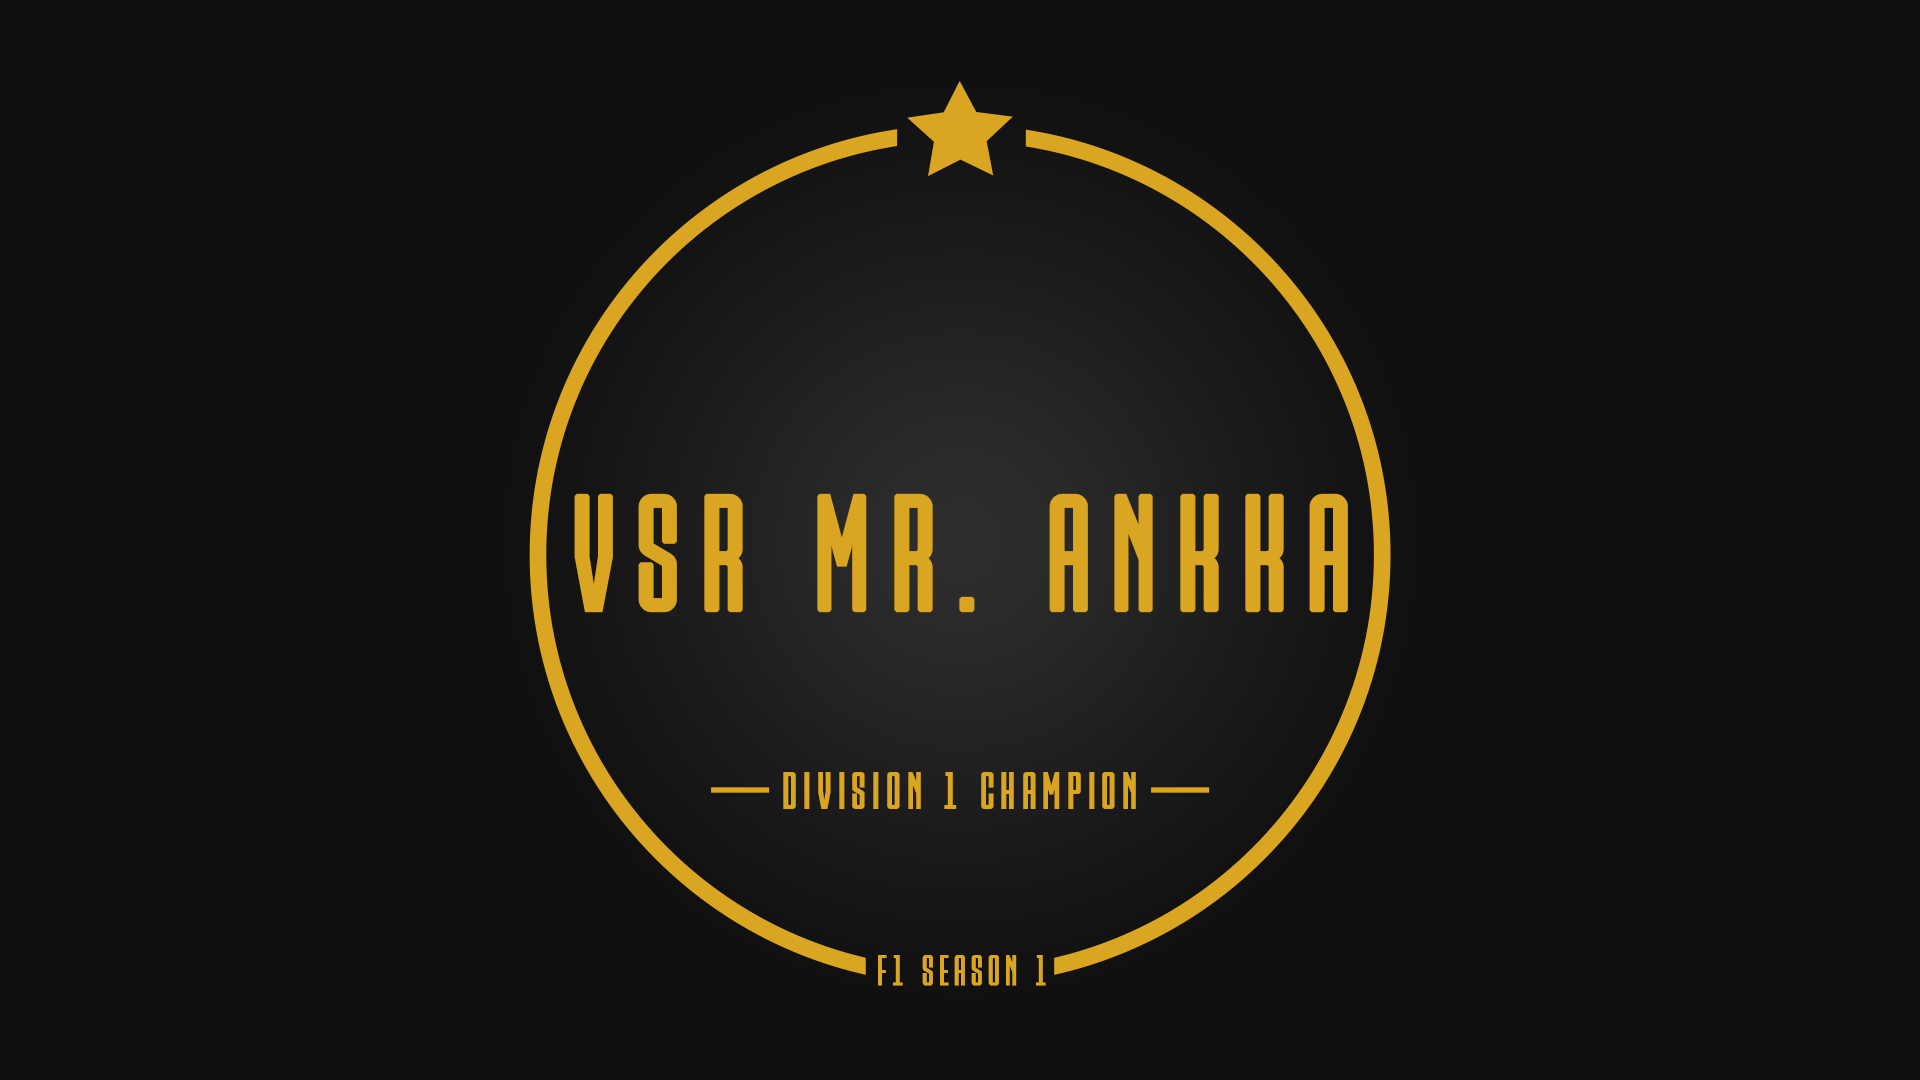 Season 1 Champion - VSR Mr. Ankka